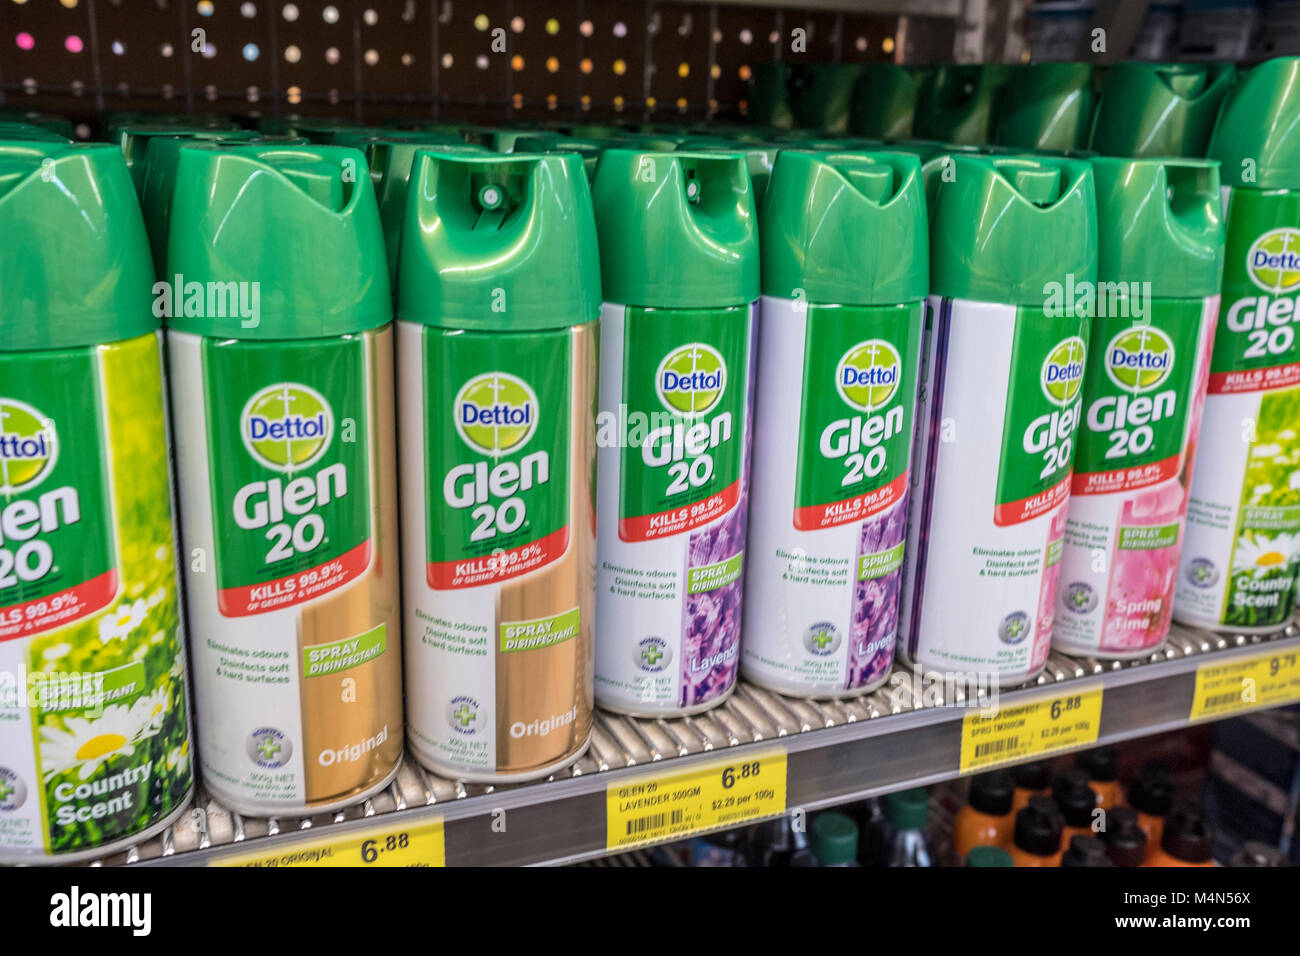 Glen 20 by Dettol disinfectant kills germs spray in aerosols,Australia Stock Photo